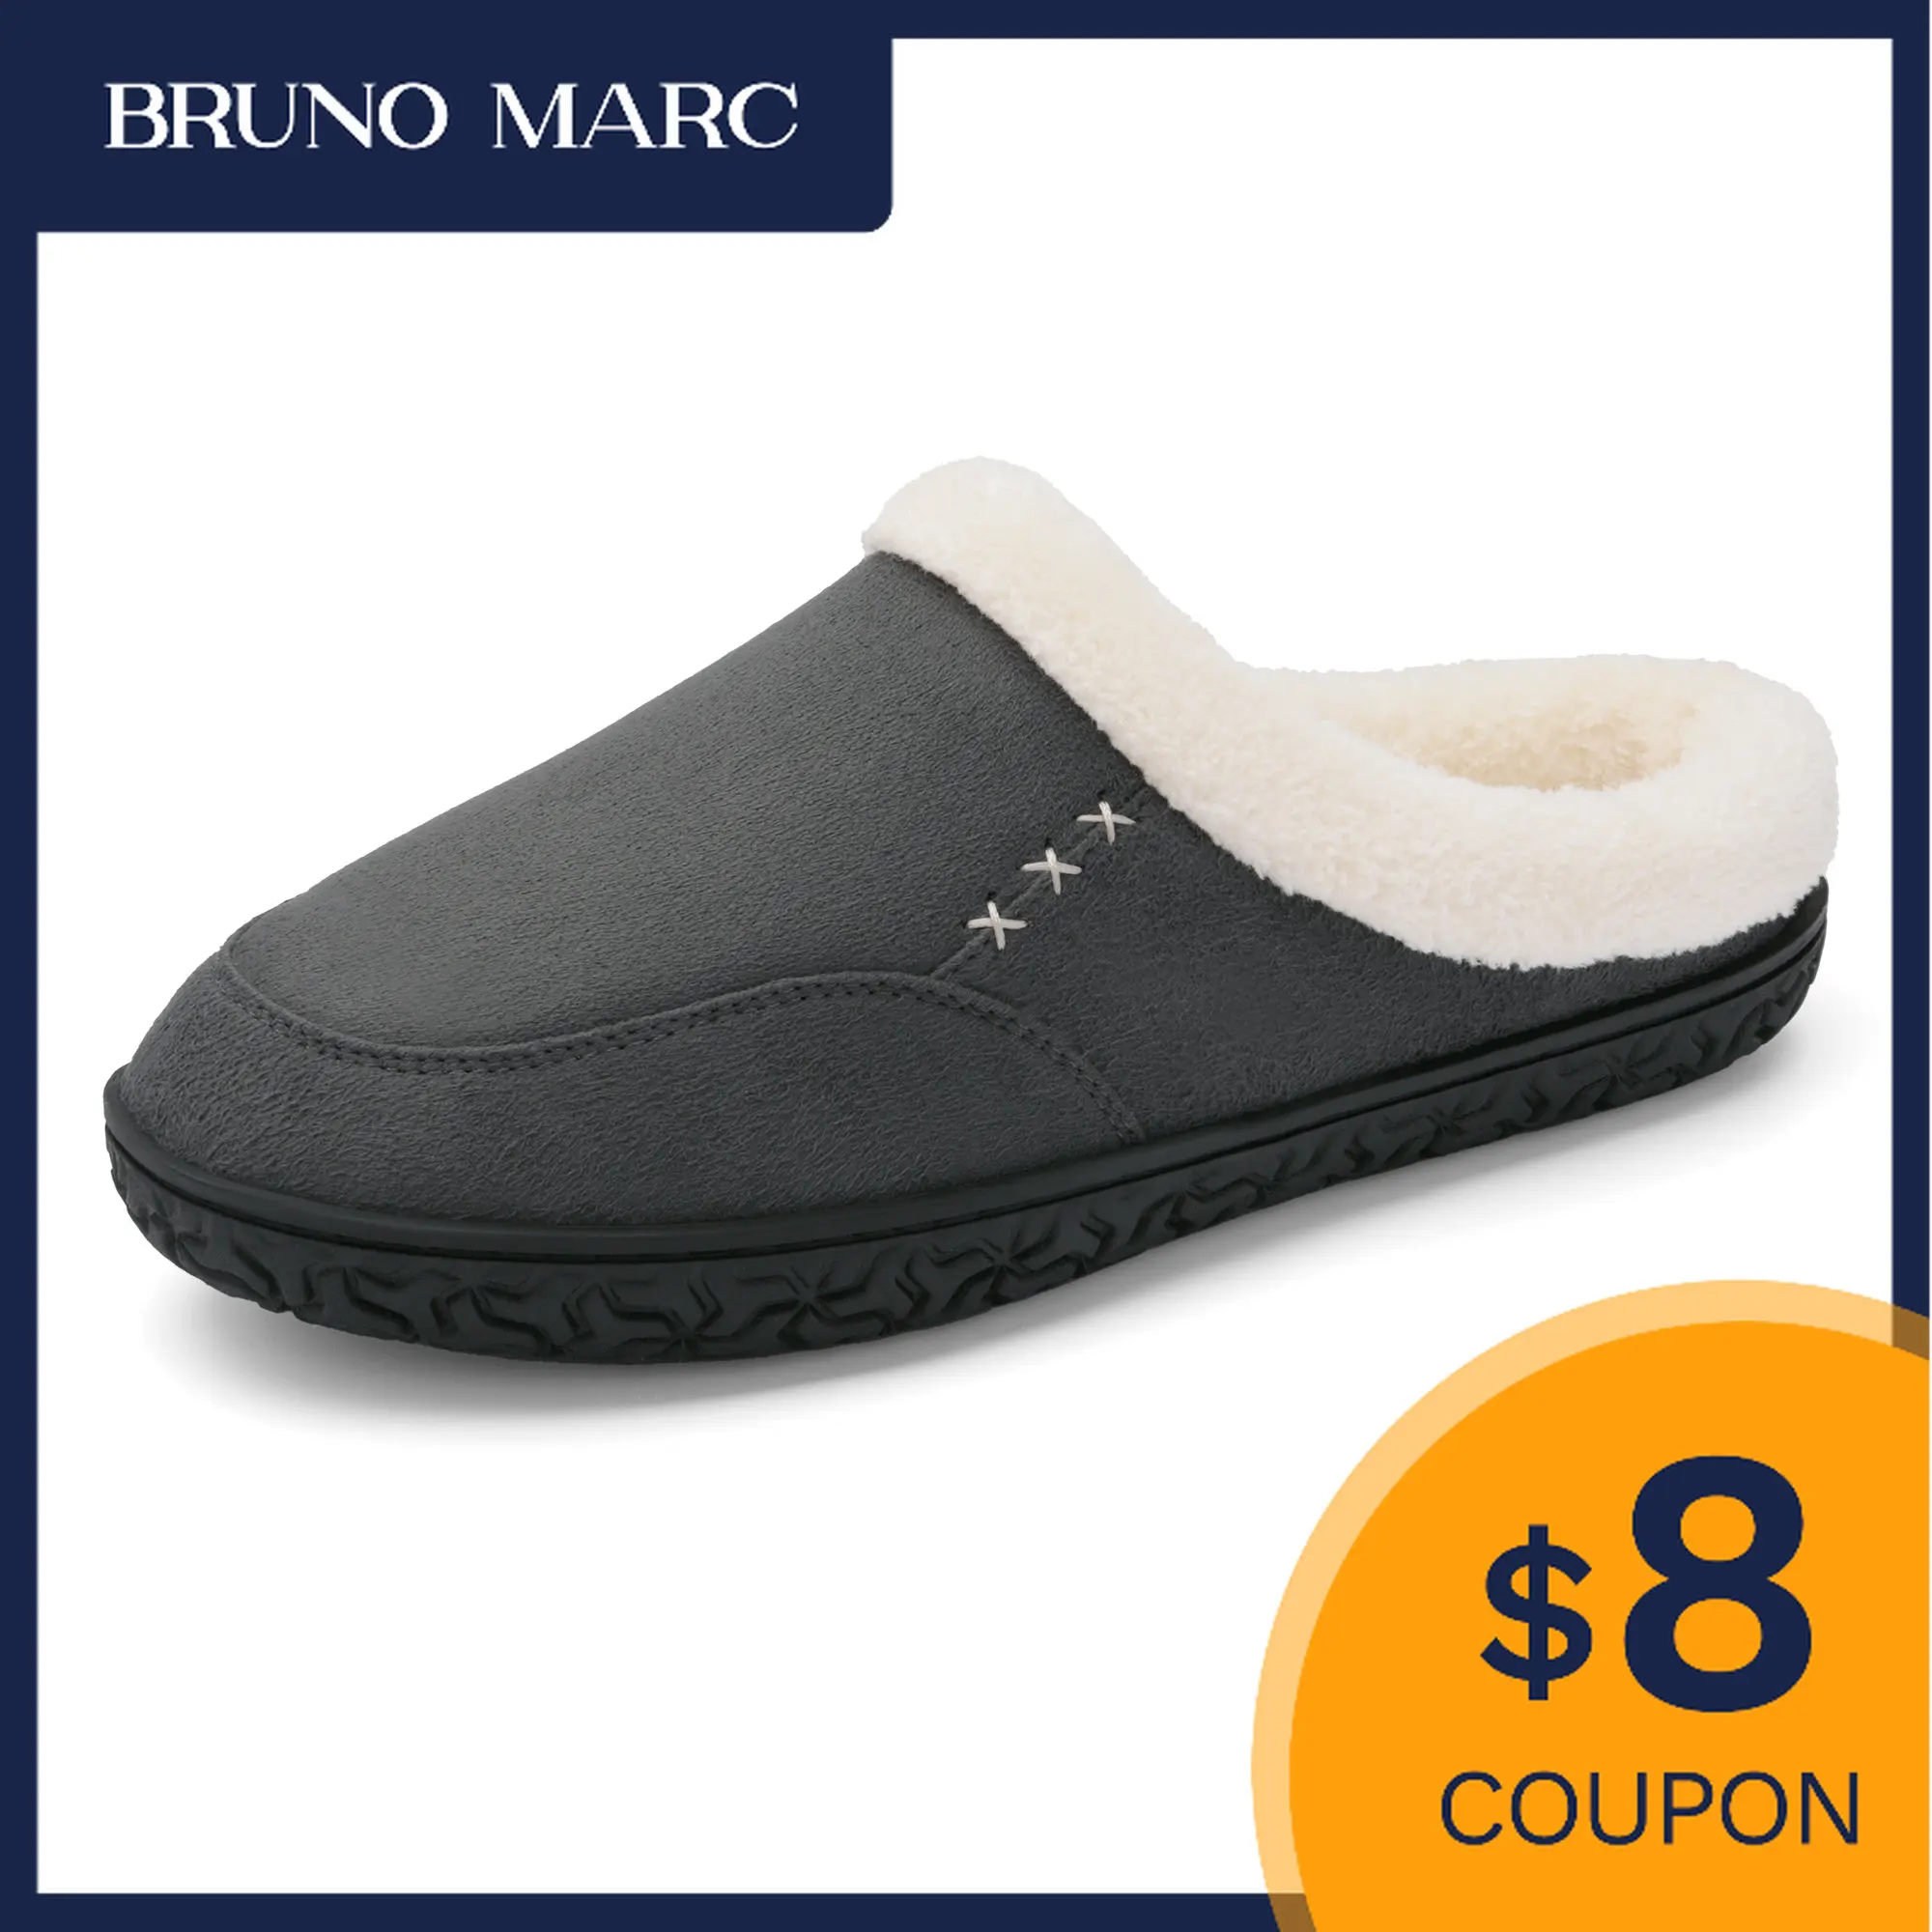 

Bruno Marc Men's House Slippers for Men Indoor Outdoor Memory Foam Slip-on Warm Fuzzy Non-Slip Bedroom House Shoes